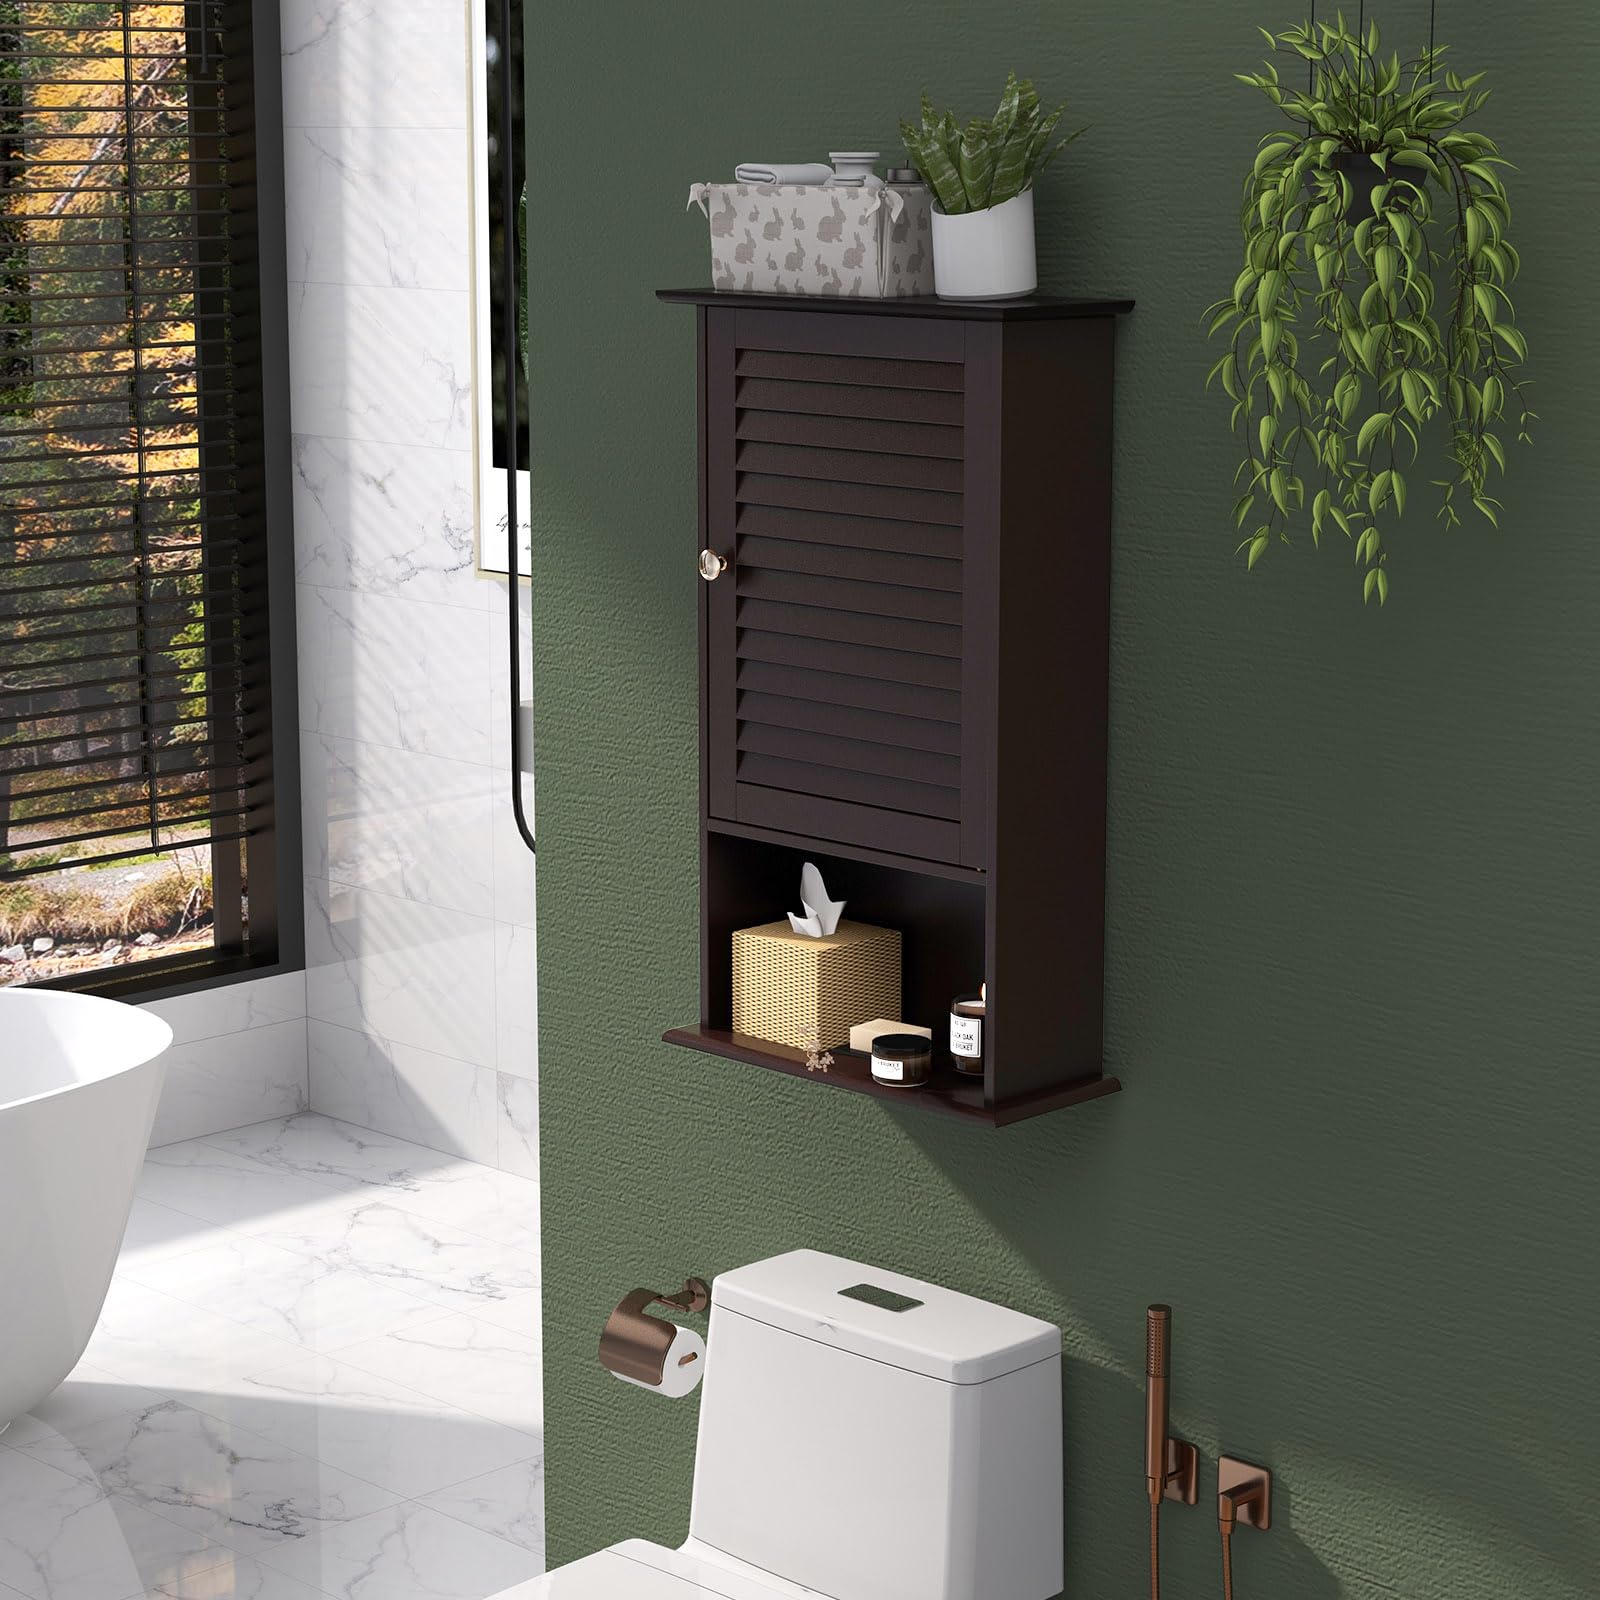 Giantex Bathroom Wall Mount Cabinet - Over The Toilet Storage Organizer with Single Door and Adjustable Shel